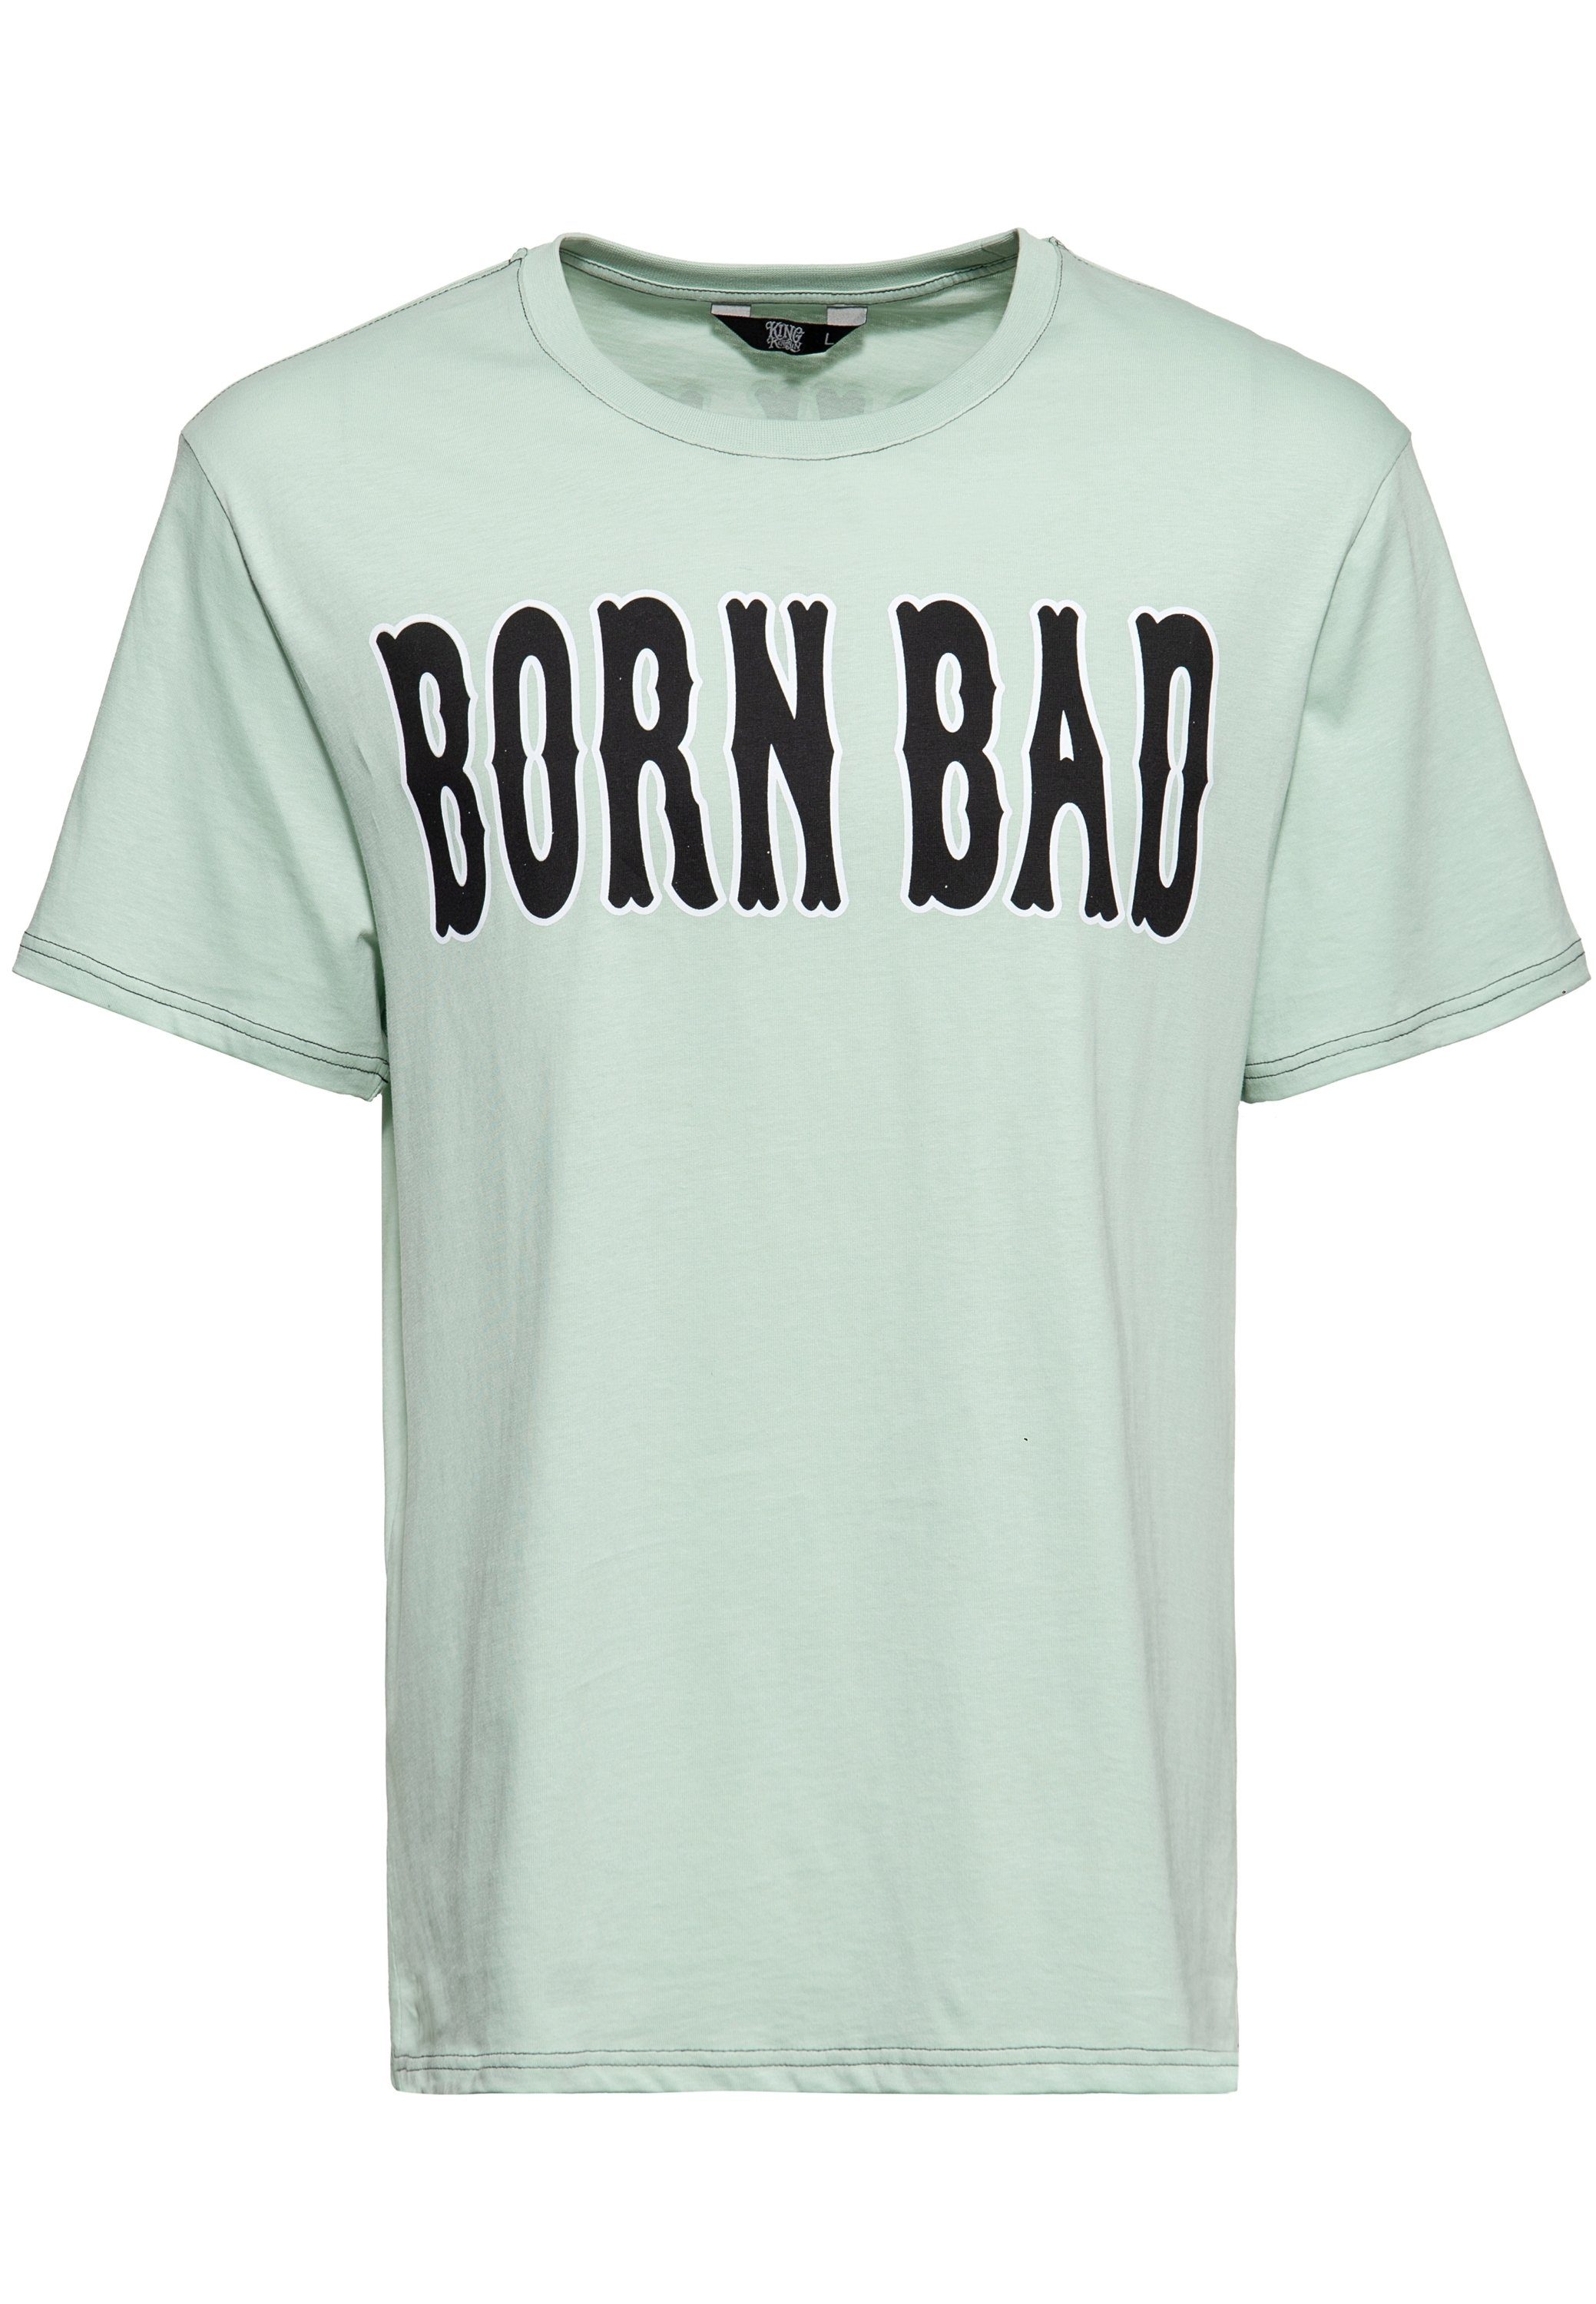 Born T-Shirt Statementprints Bad KingKerosin